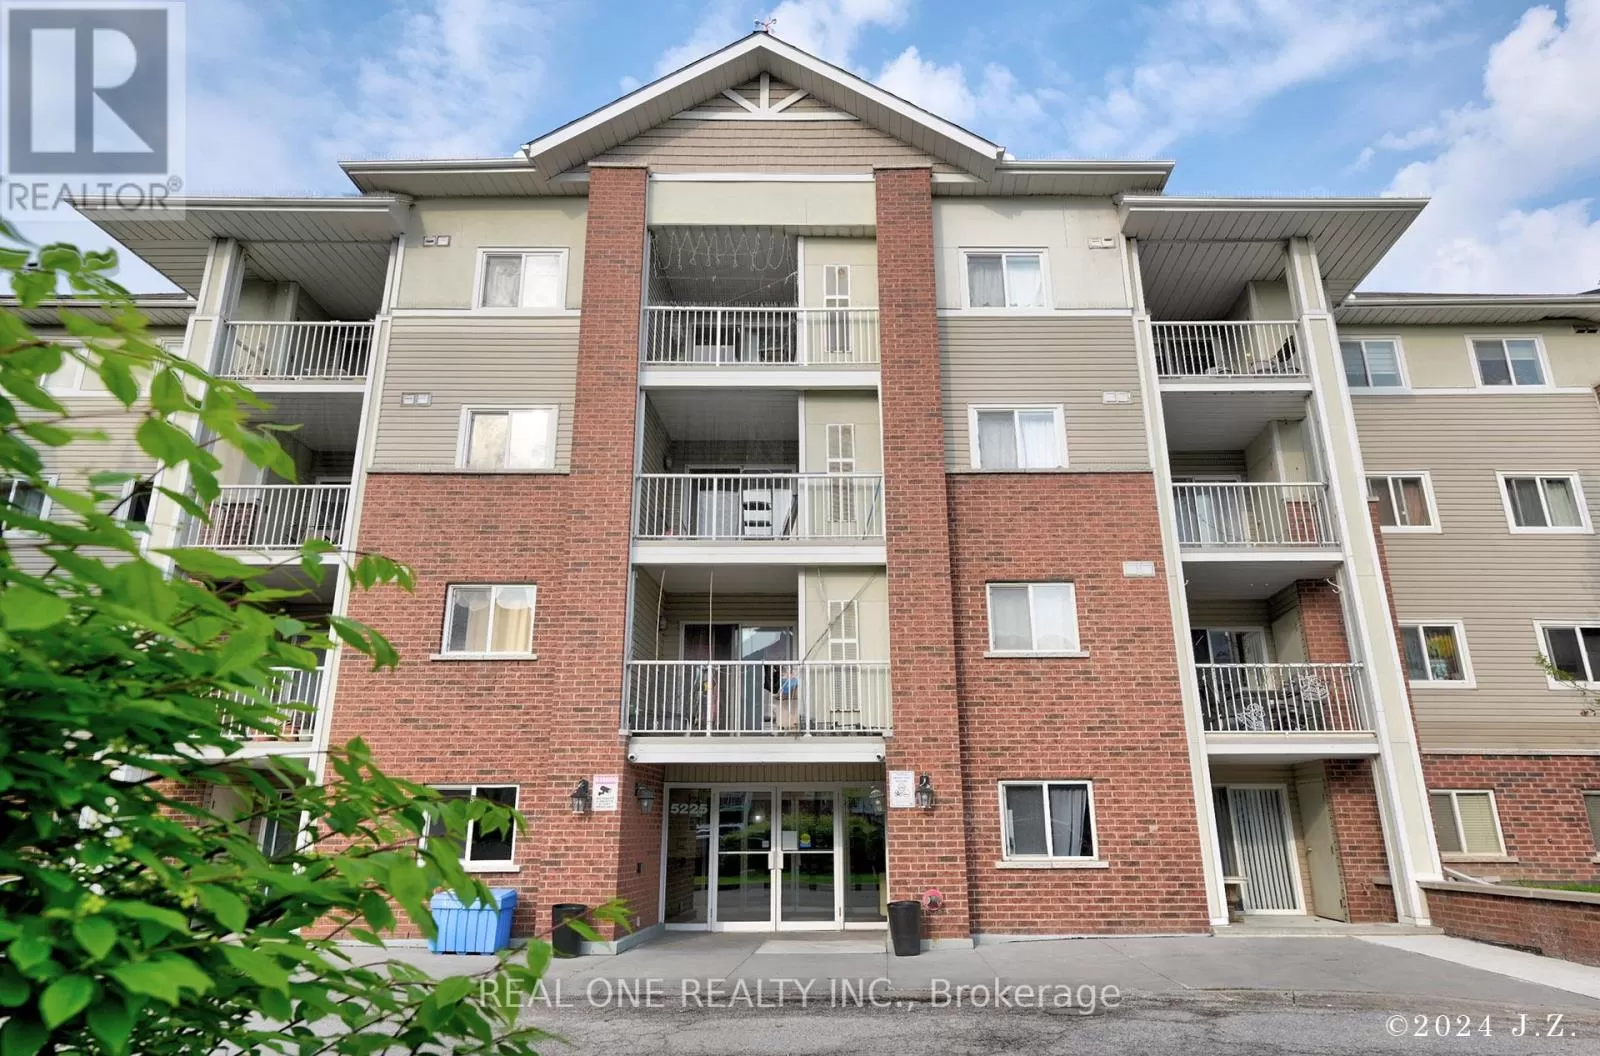 Apartment for rent: 109 - 5225 Finch Avenue E, Toronto, Ontario M1S 5W8